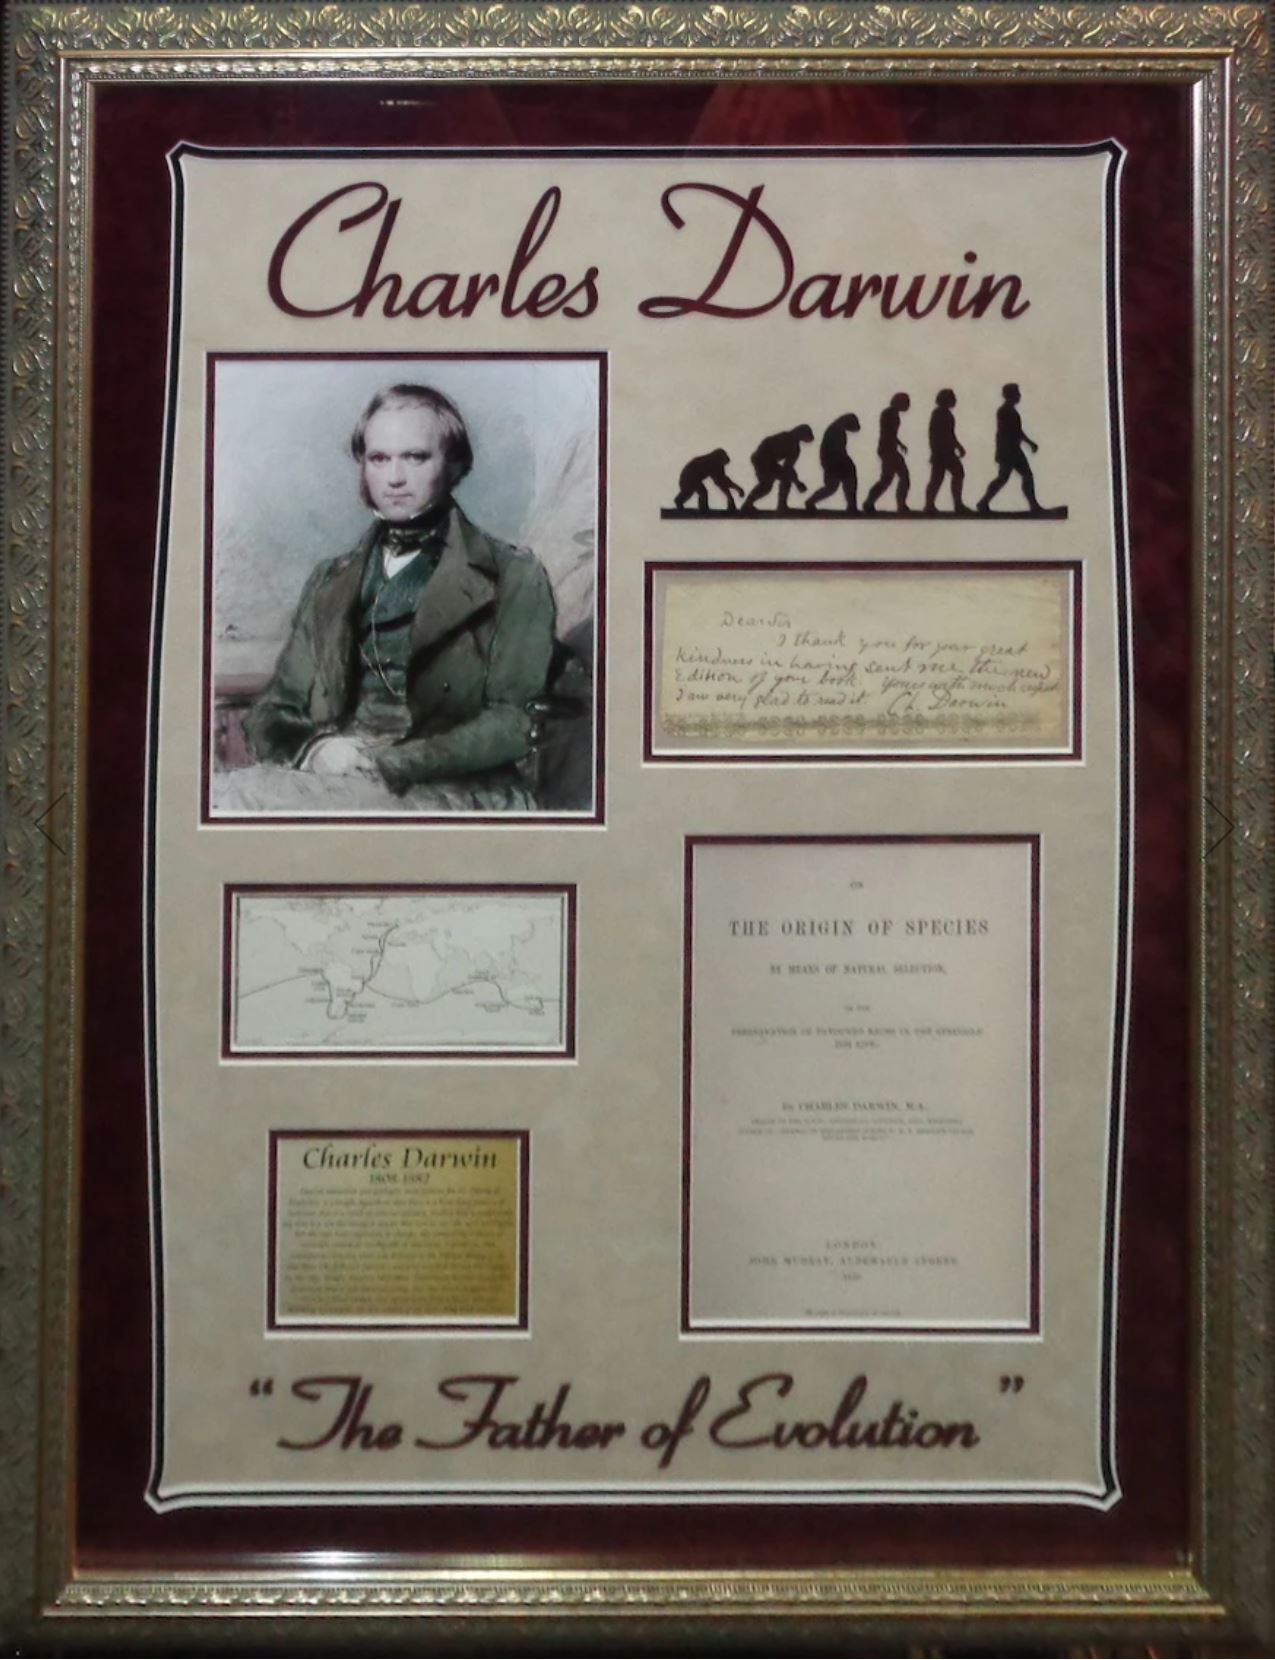 Charles Darwin Signature